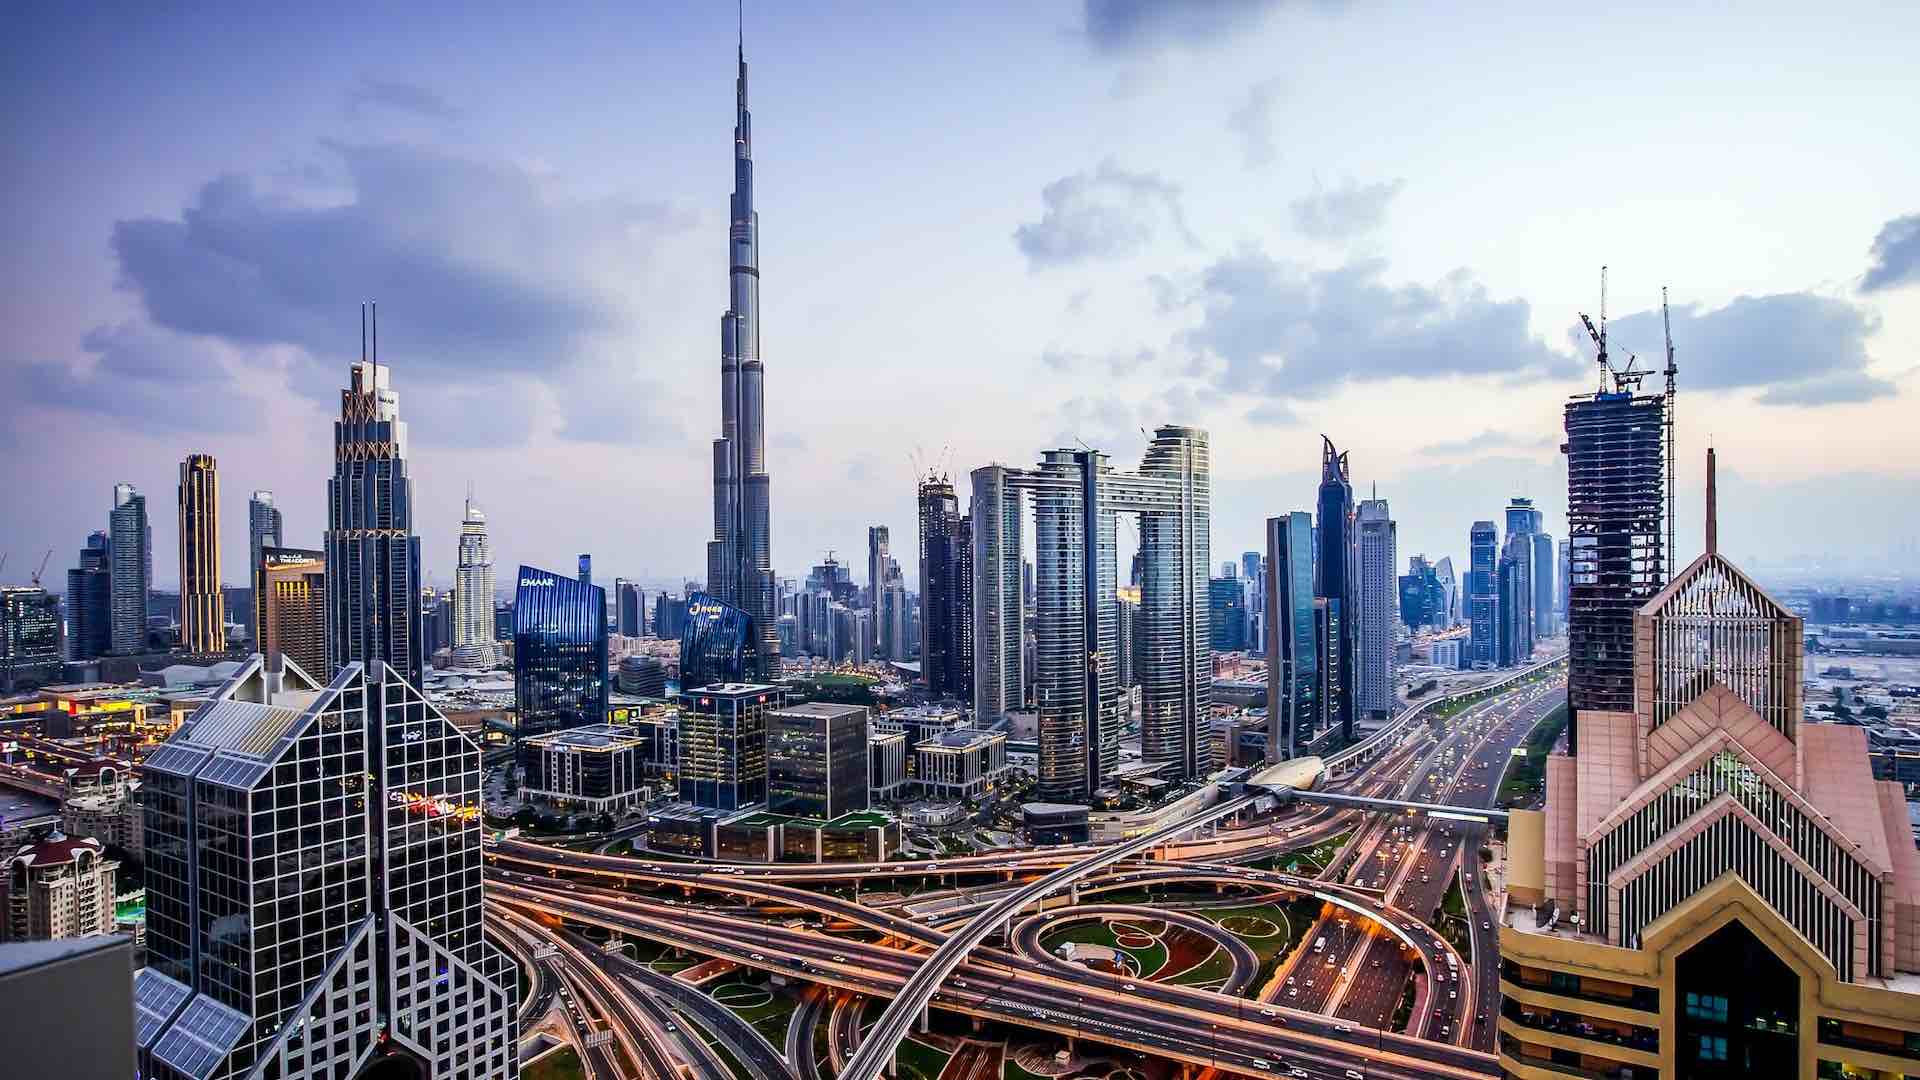 Real estate market in Dubai records highest sales volume in nine years in June